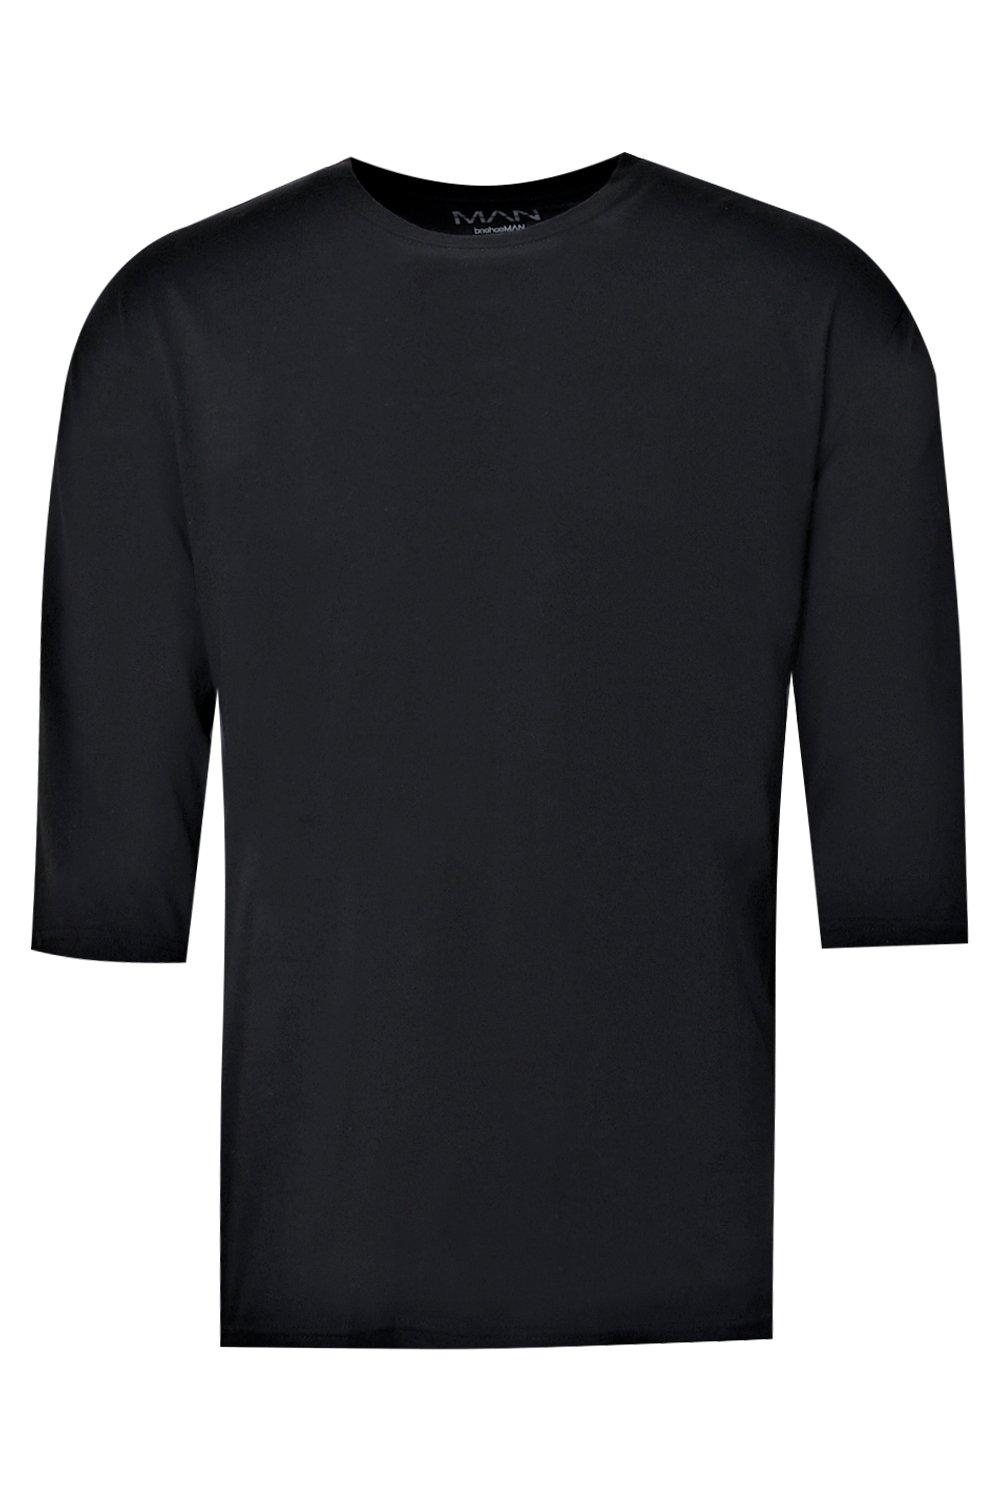 cyklus gentage Kristendom Men's Loose Fit 3/4 Sleeve T-Shirt | boohoo